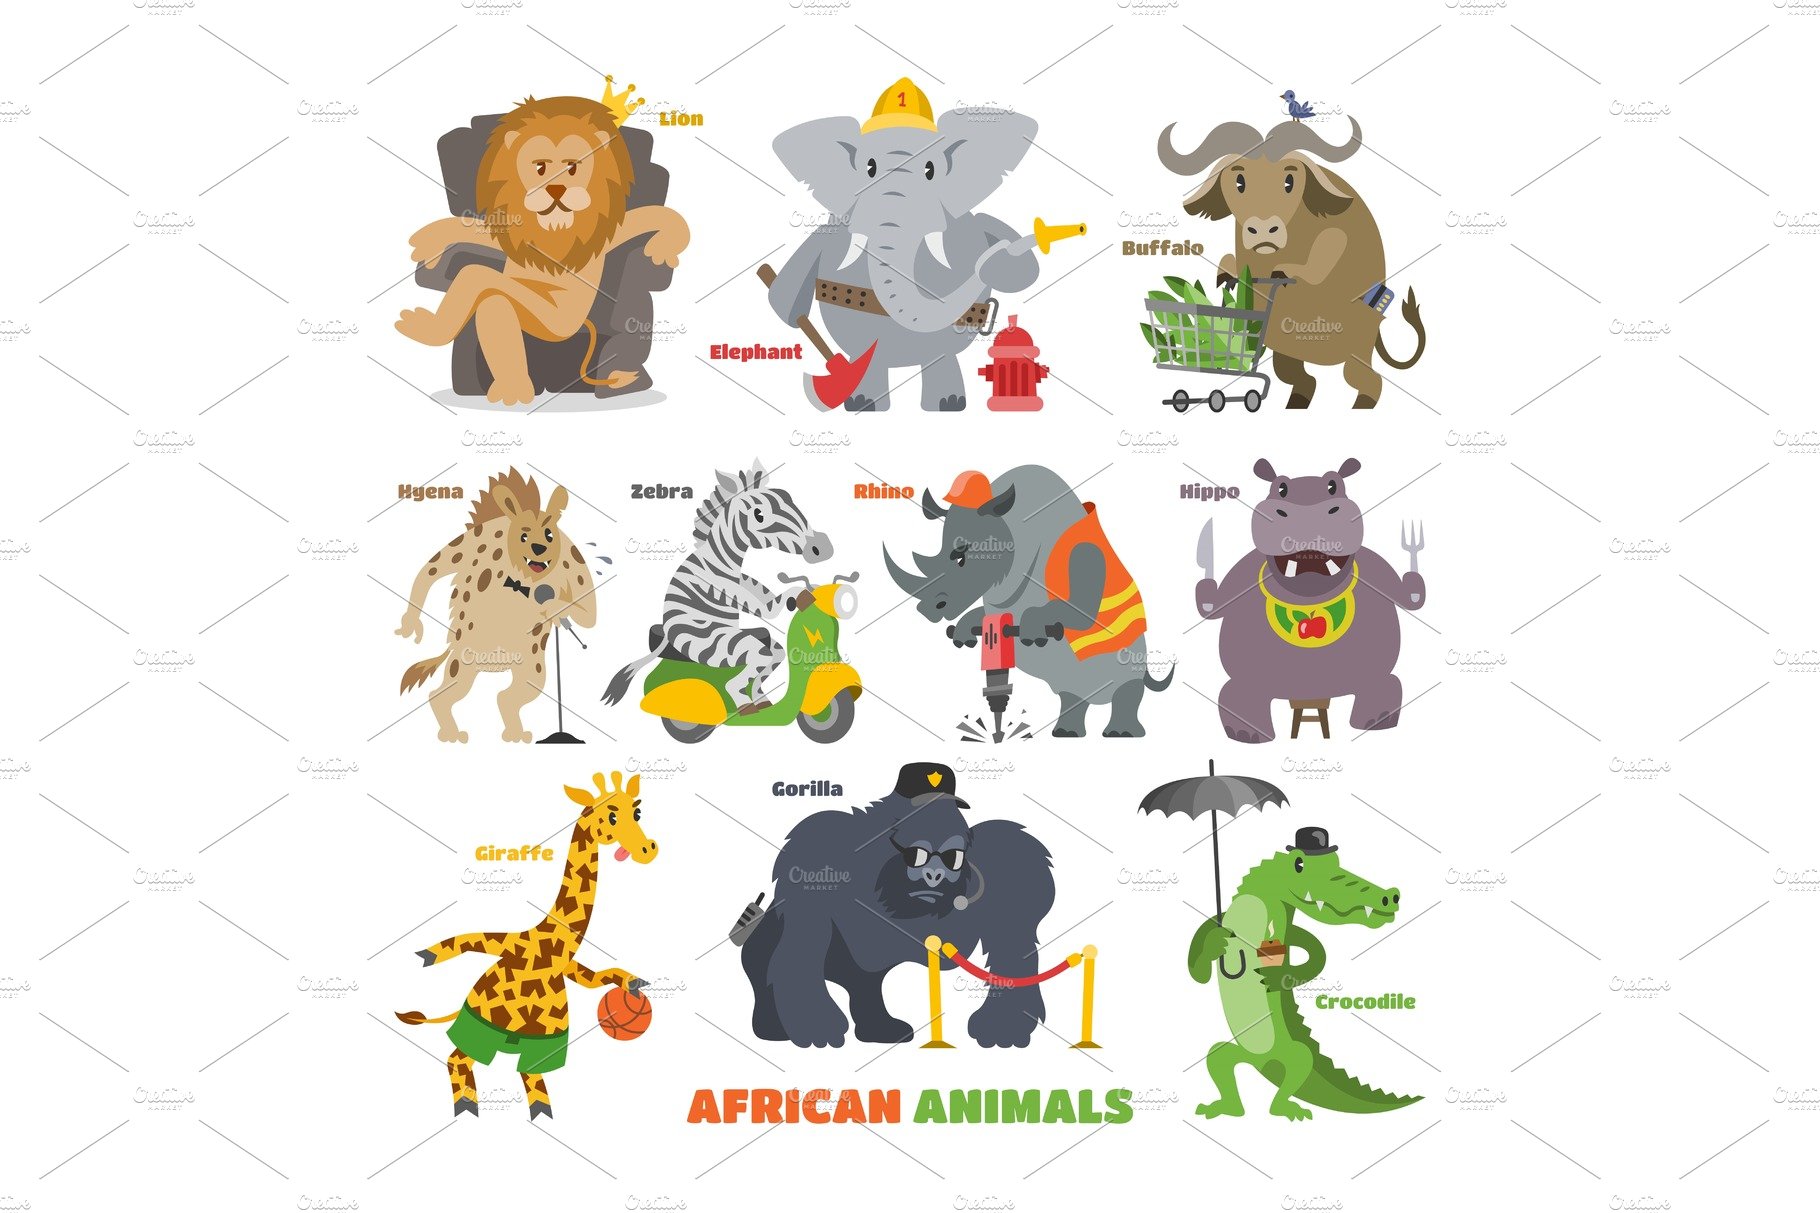 African animals vector cartoon wild cover image.